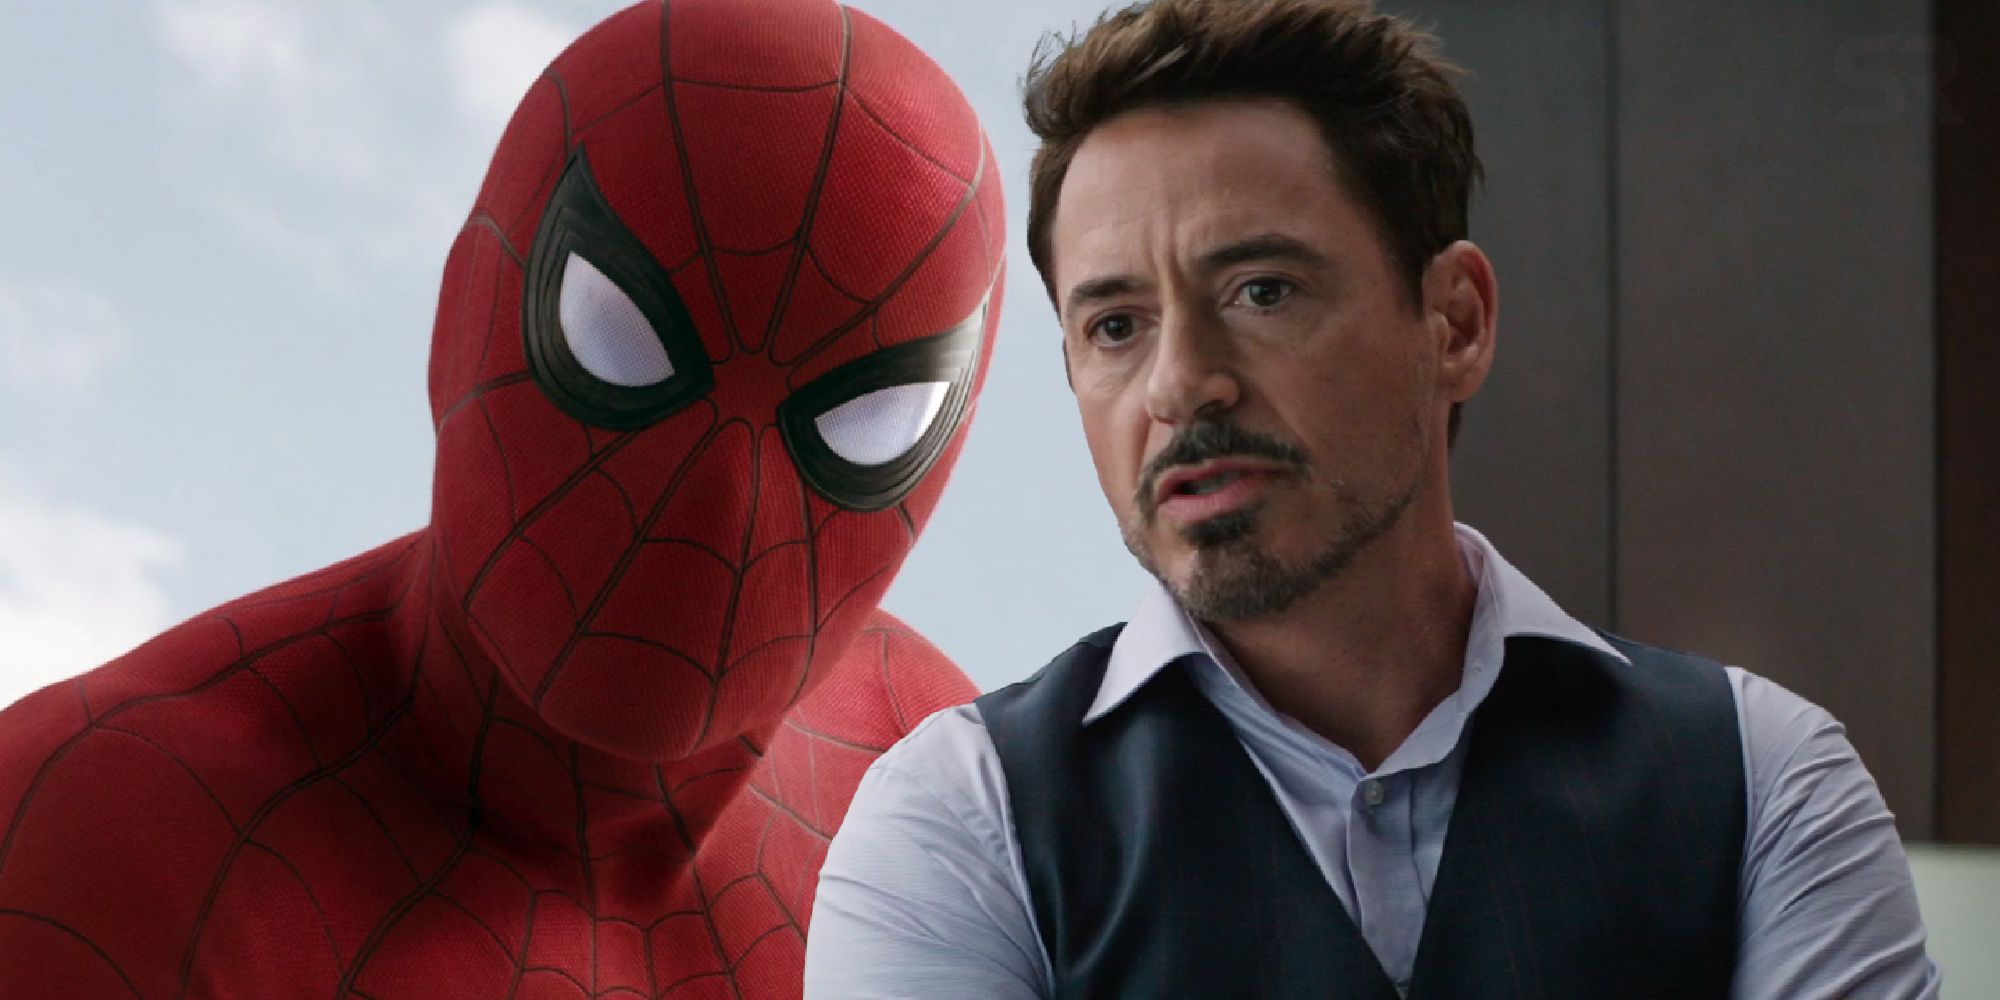 guerra Revolucionario volverse loco Civil War: Why Tony Stark Recruited Spider-Man For Team Iron Man